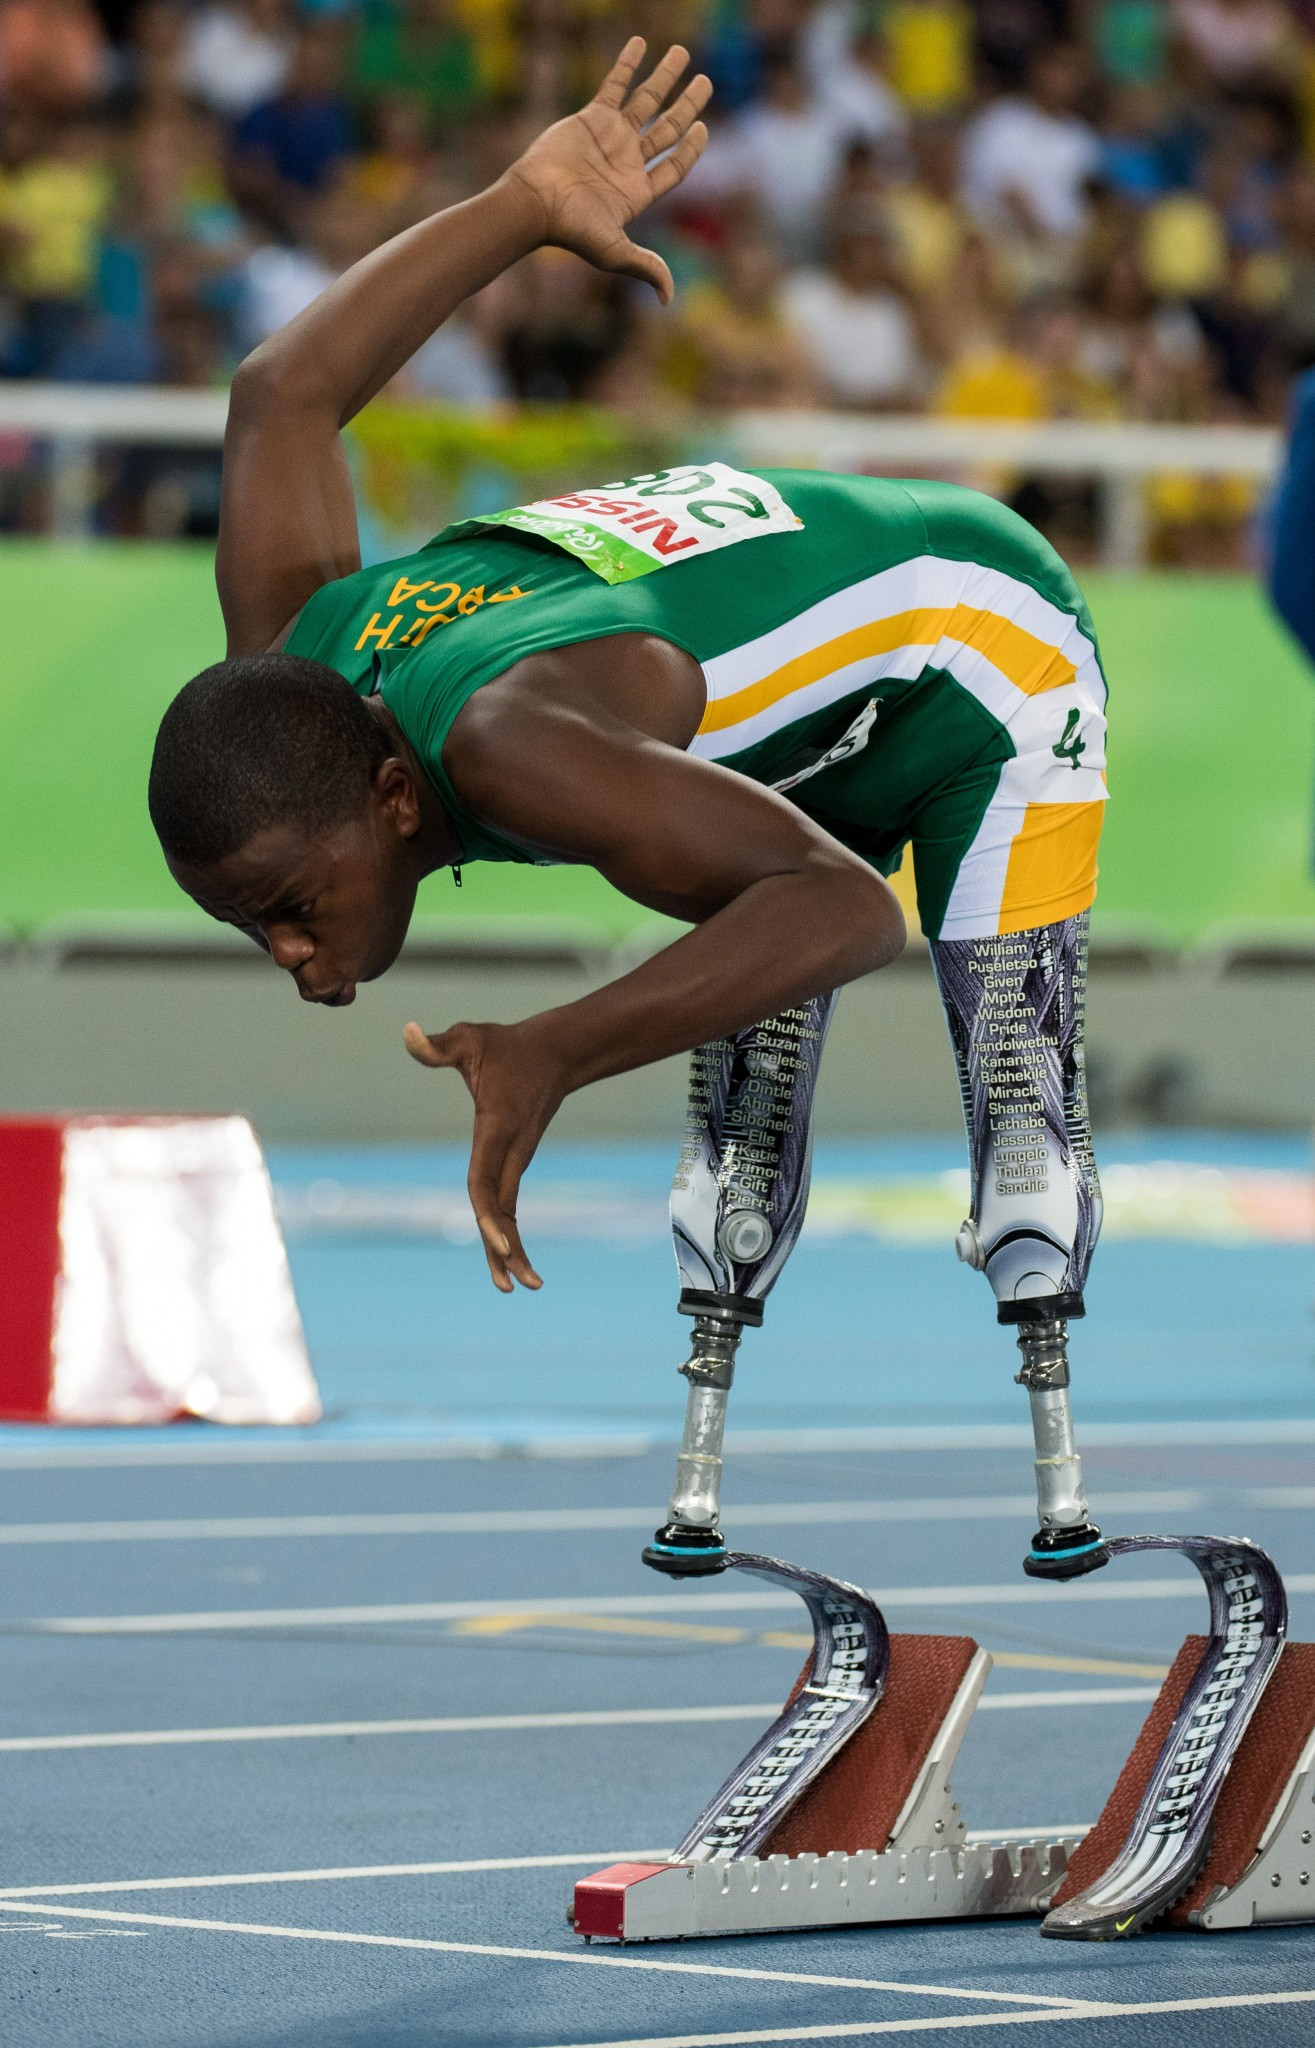 Rio 2016 silver medallist Mahlangu among leading names set to compete at World Para Athletics Junior Championships